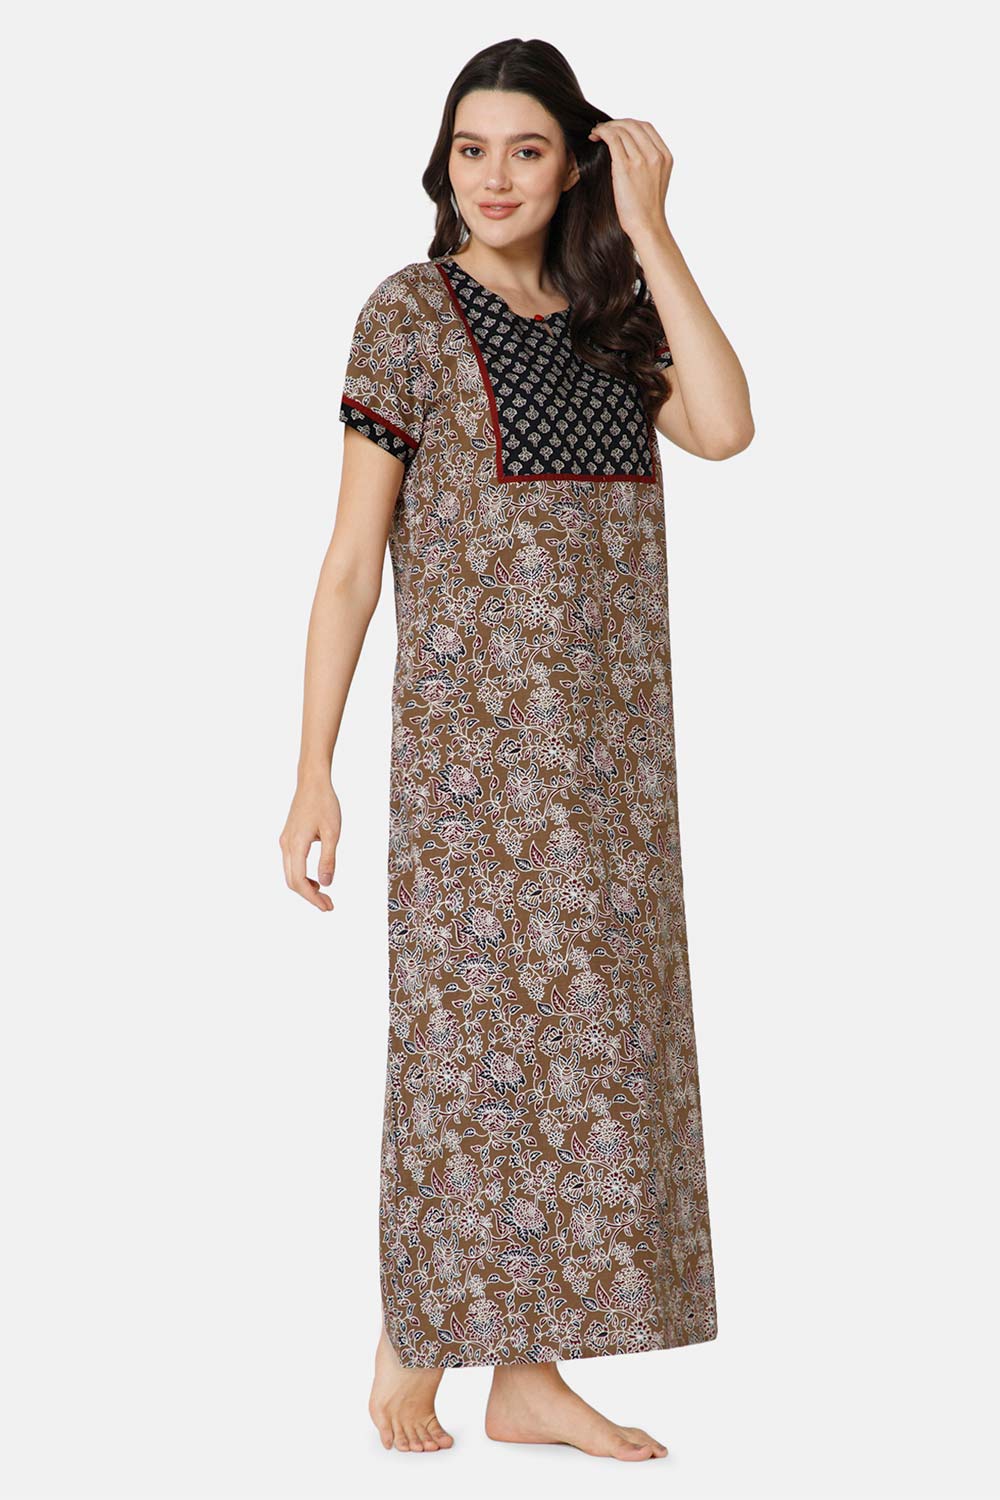 Naidu Hall A-line Women's Nighty Full Length Half Sleeve  - Olive - R142